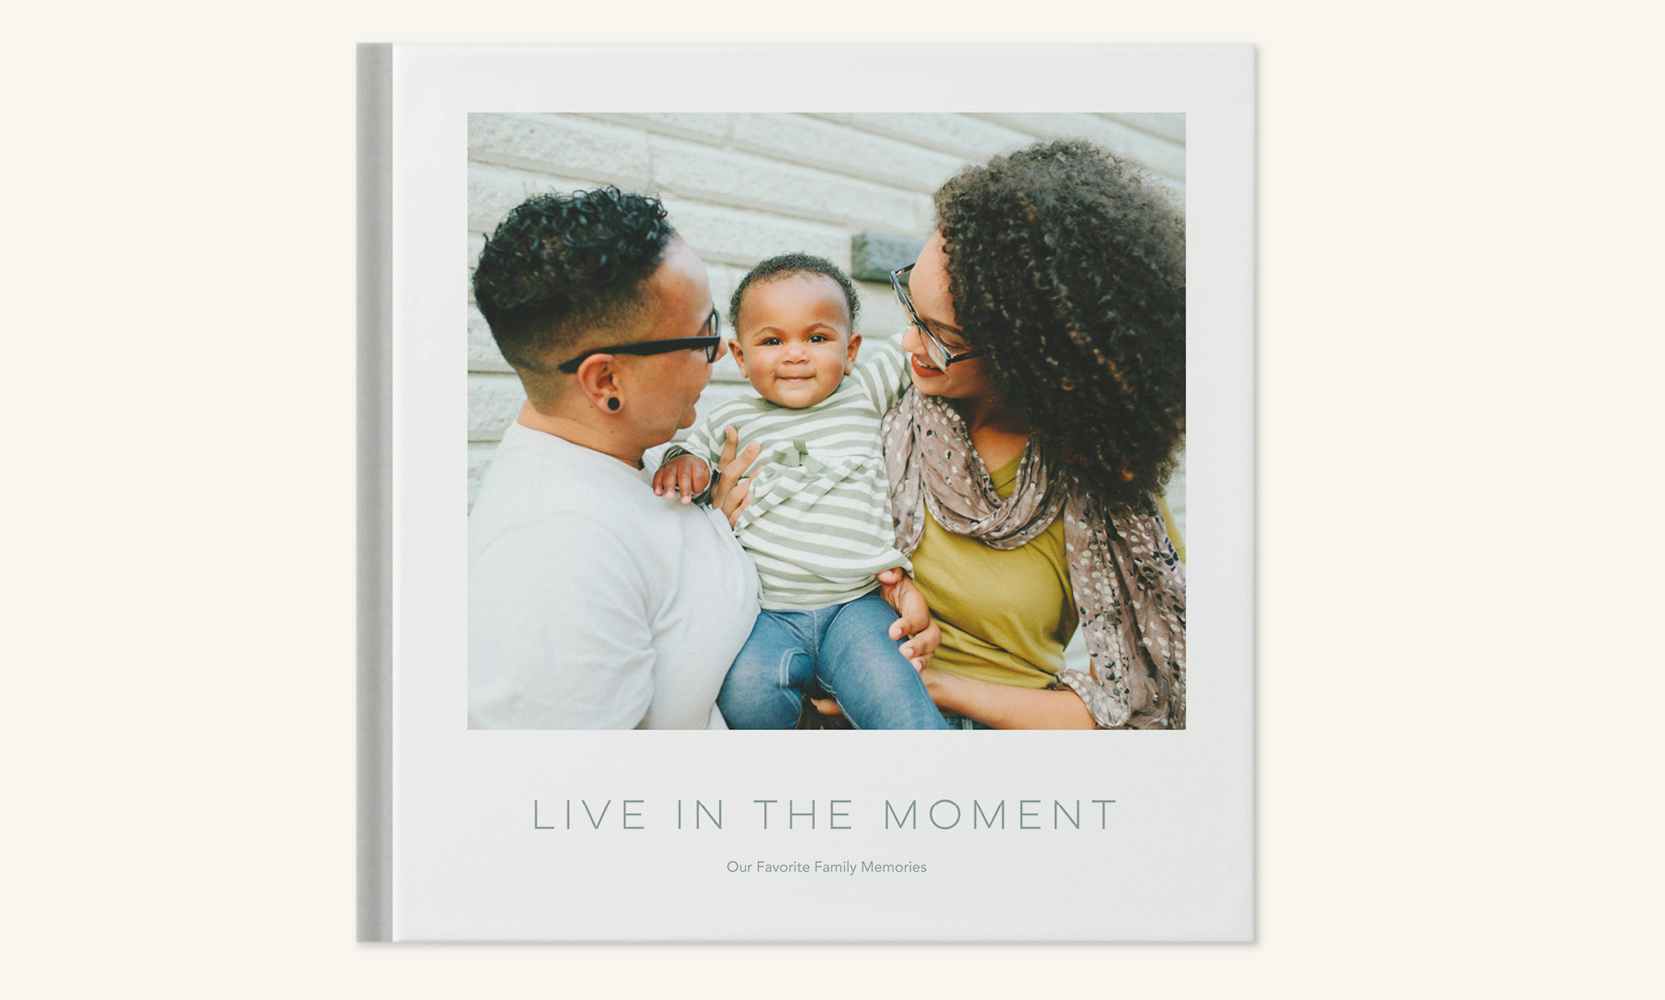 Family photobook from Shutterfly